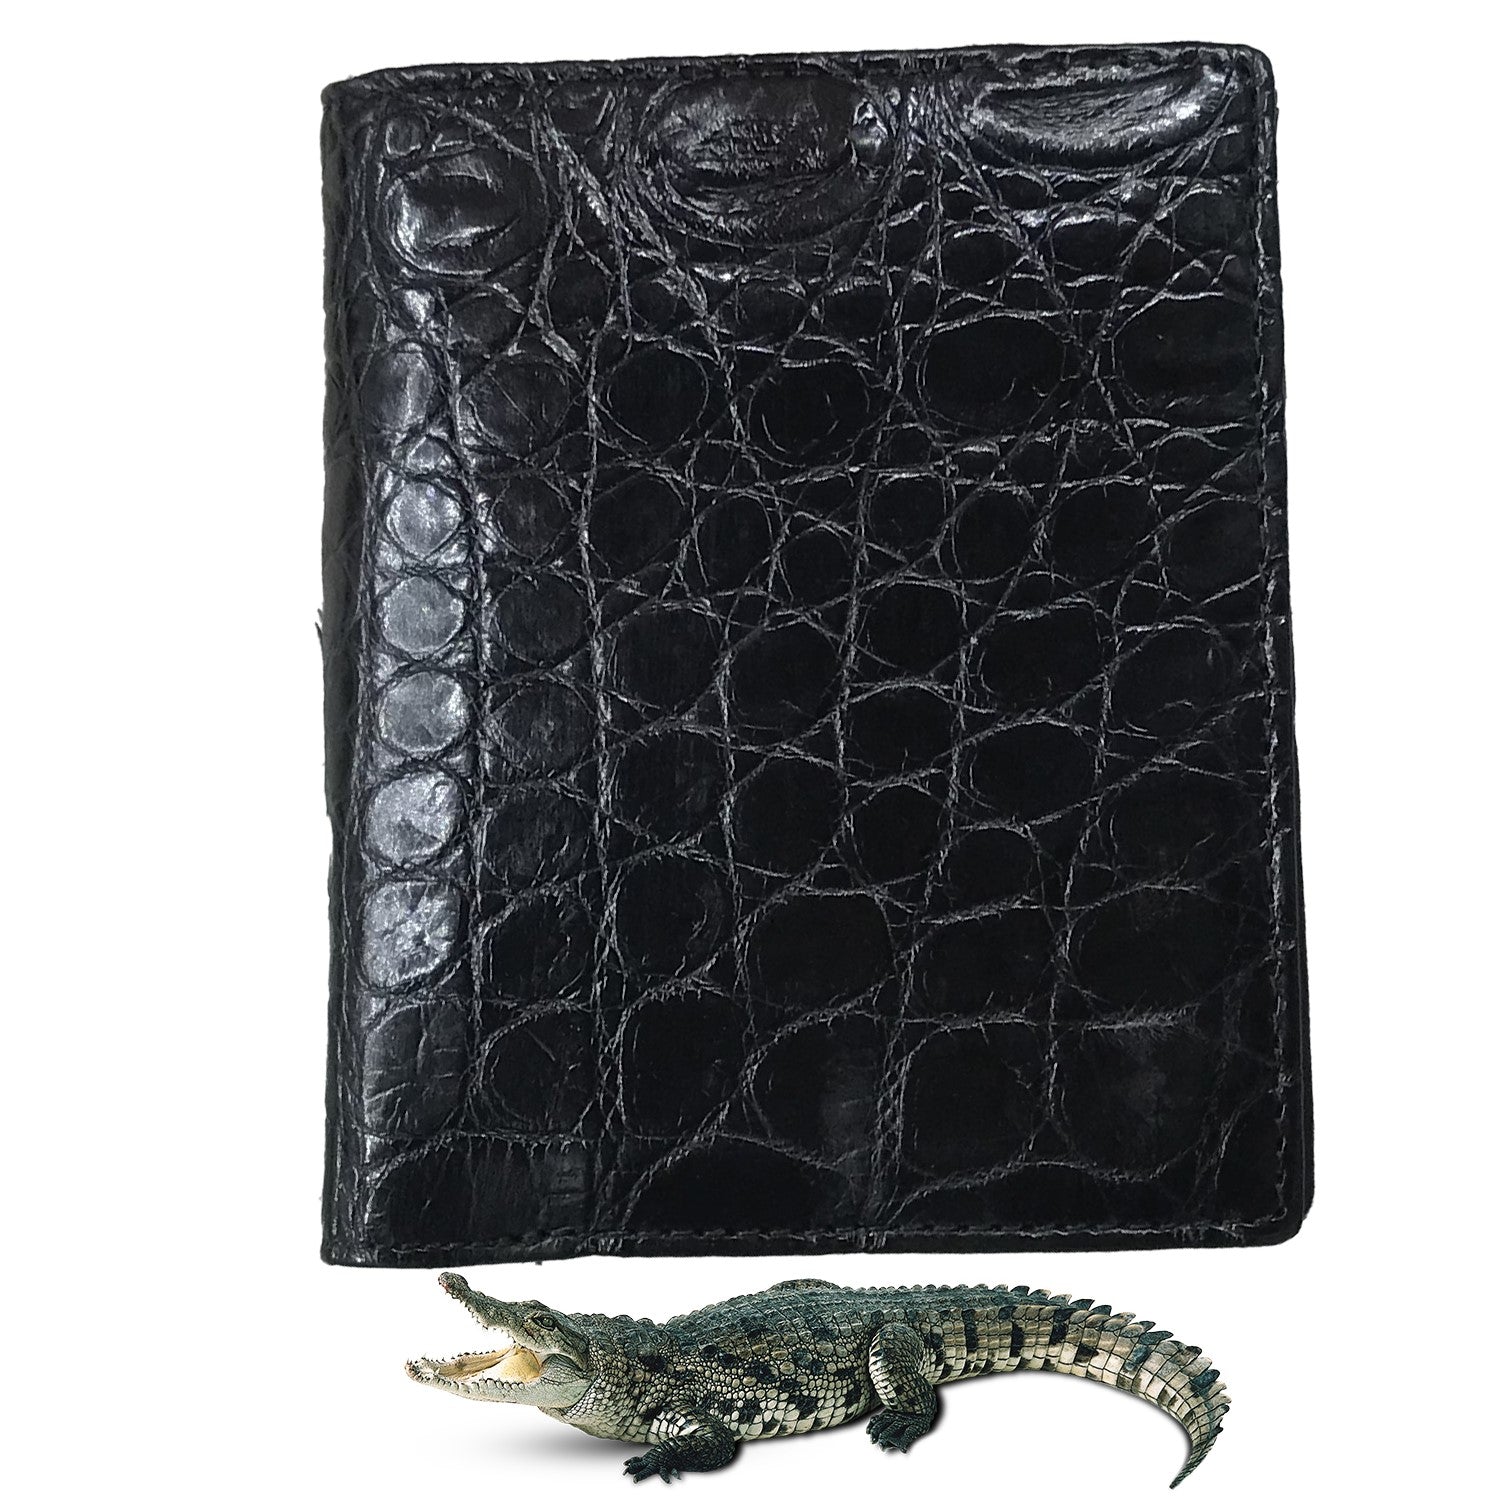 Black Alligator Skin Bifold Vertical Wallet For Men | Handmade Crocodile Leather Wallet RFID Blocking | VL5683 - Vinacreations